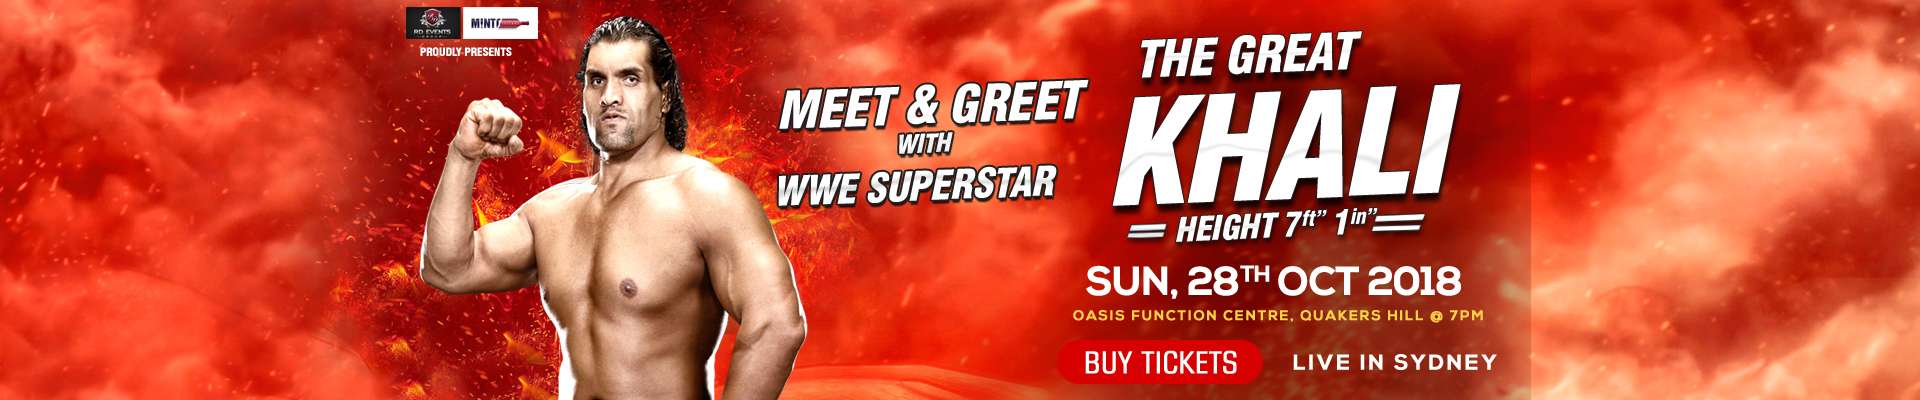 Meet & Greet with WWE Superstar The Great Khali In Sydney